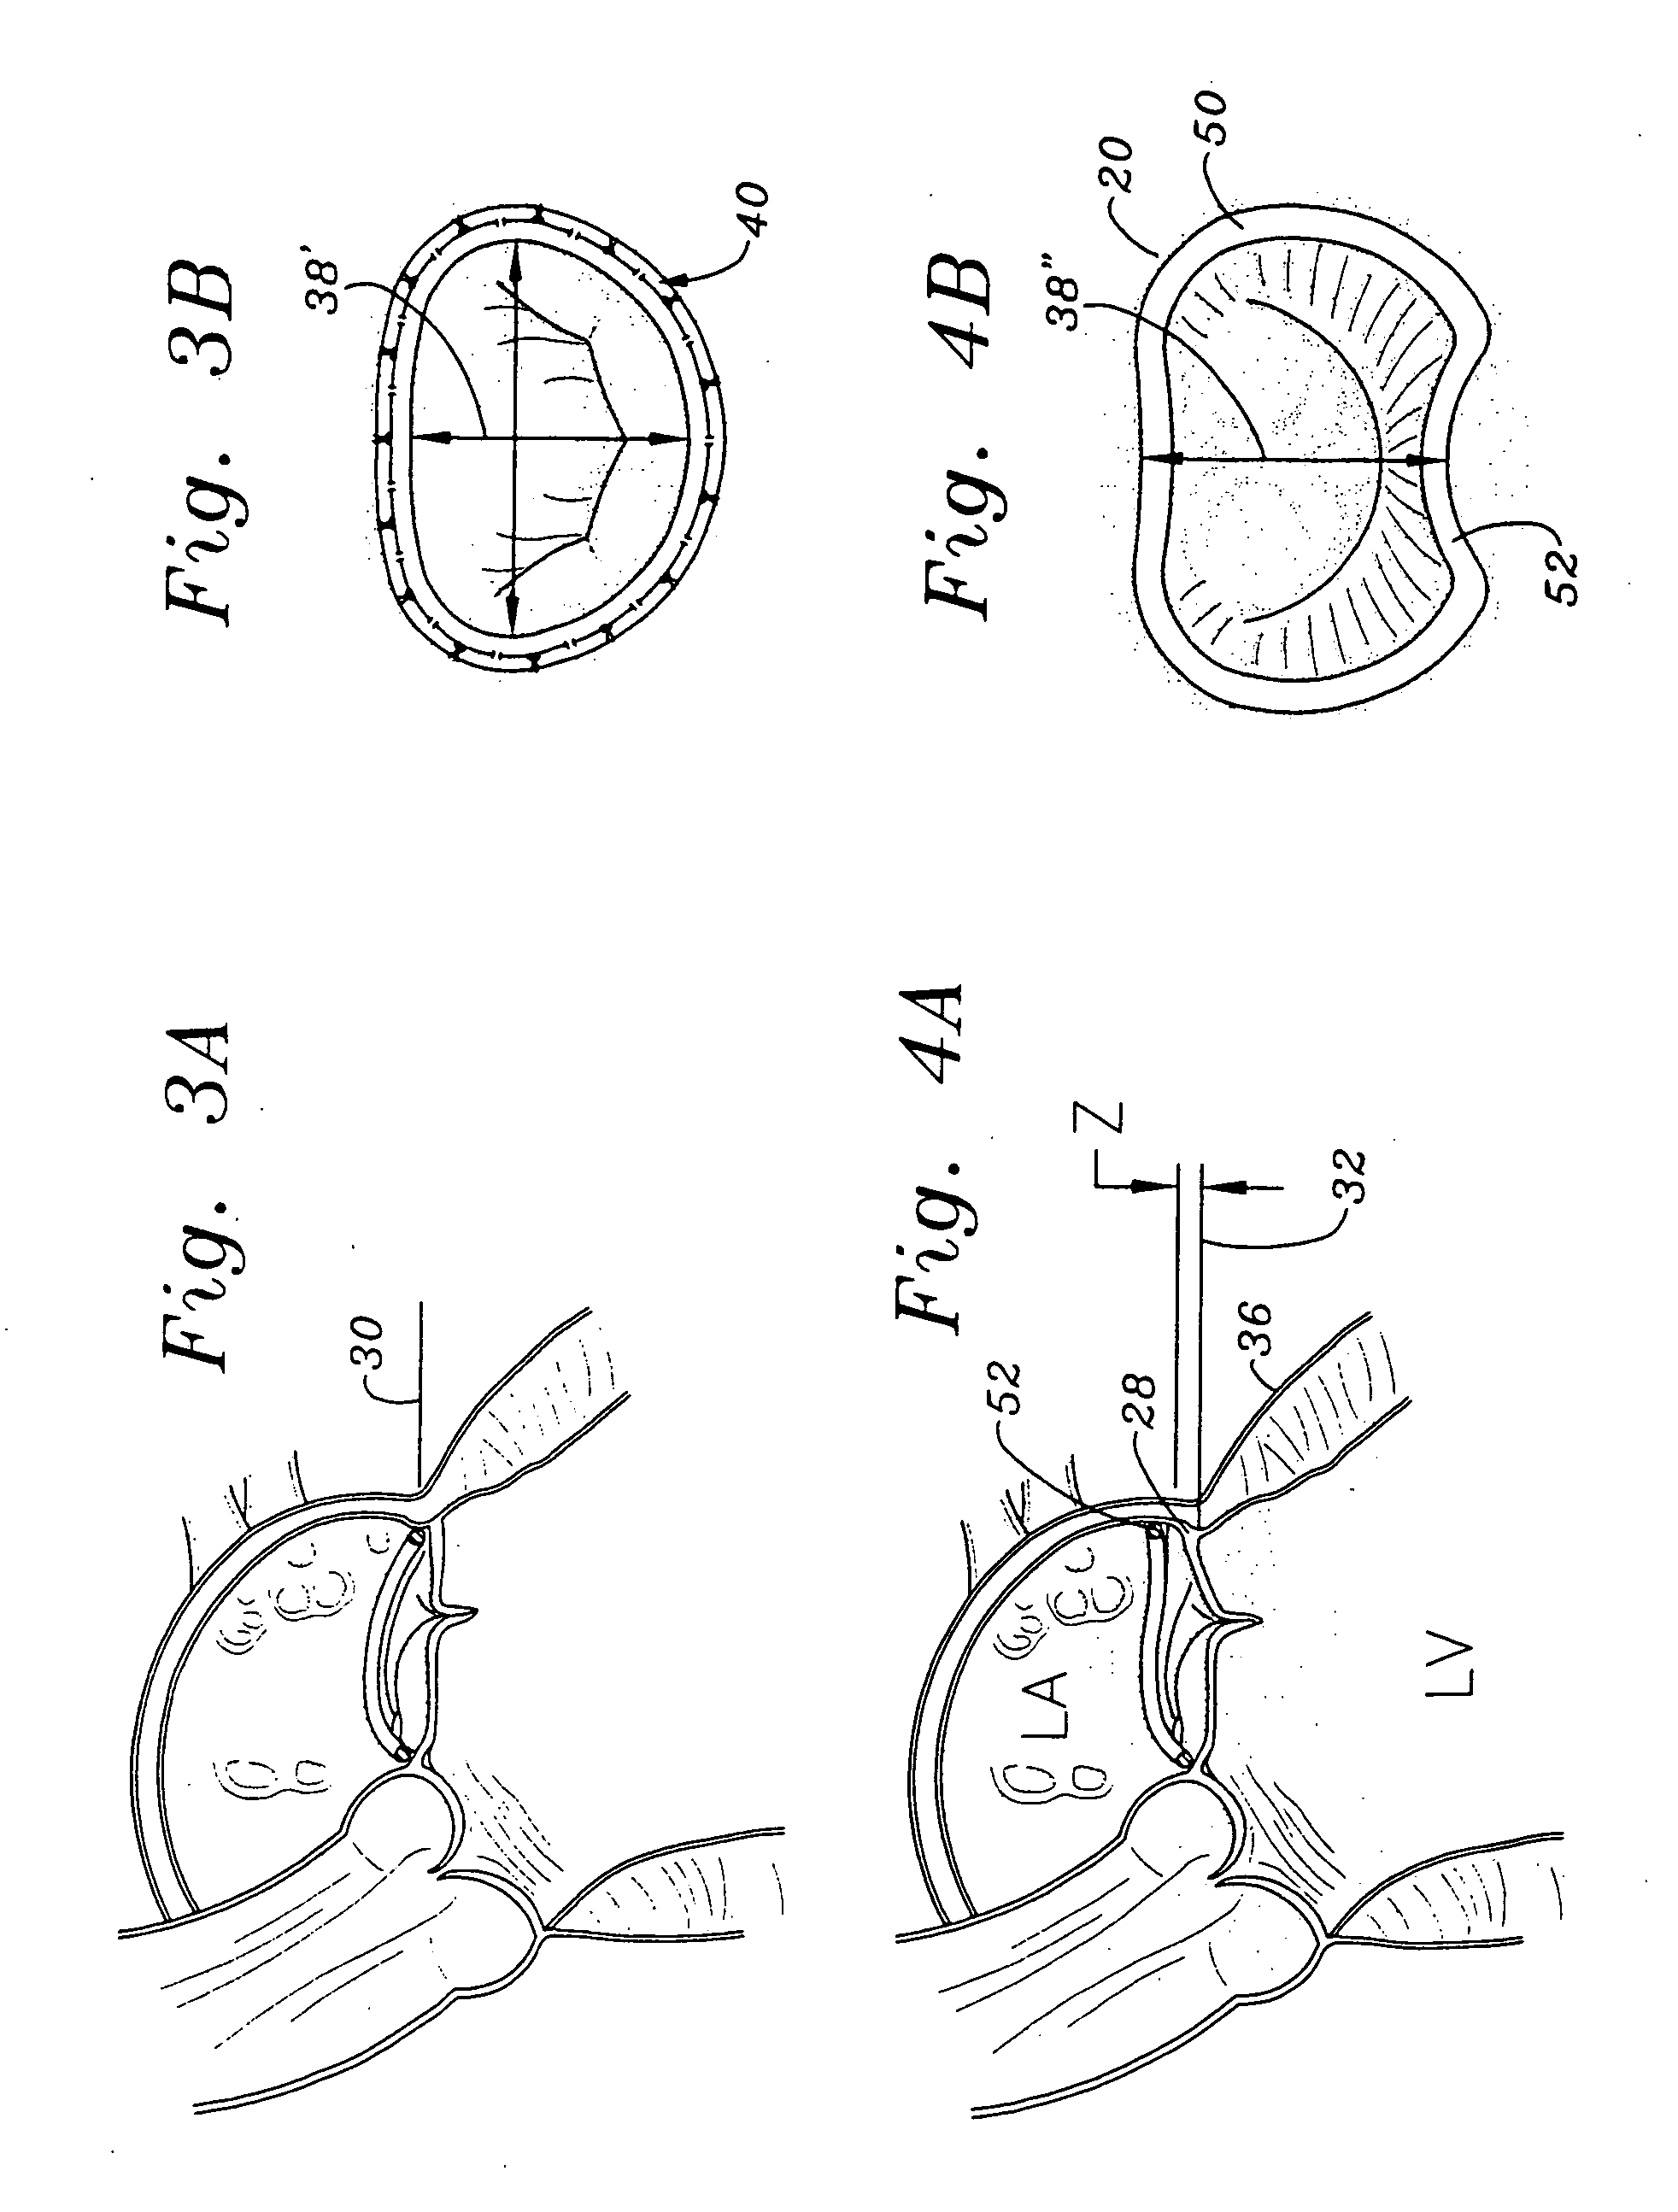 Methods of implanting a mitral valve annuloplasty ring to correct mitral regurgitation